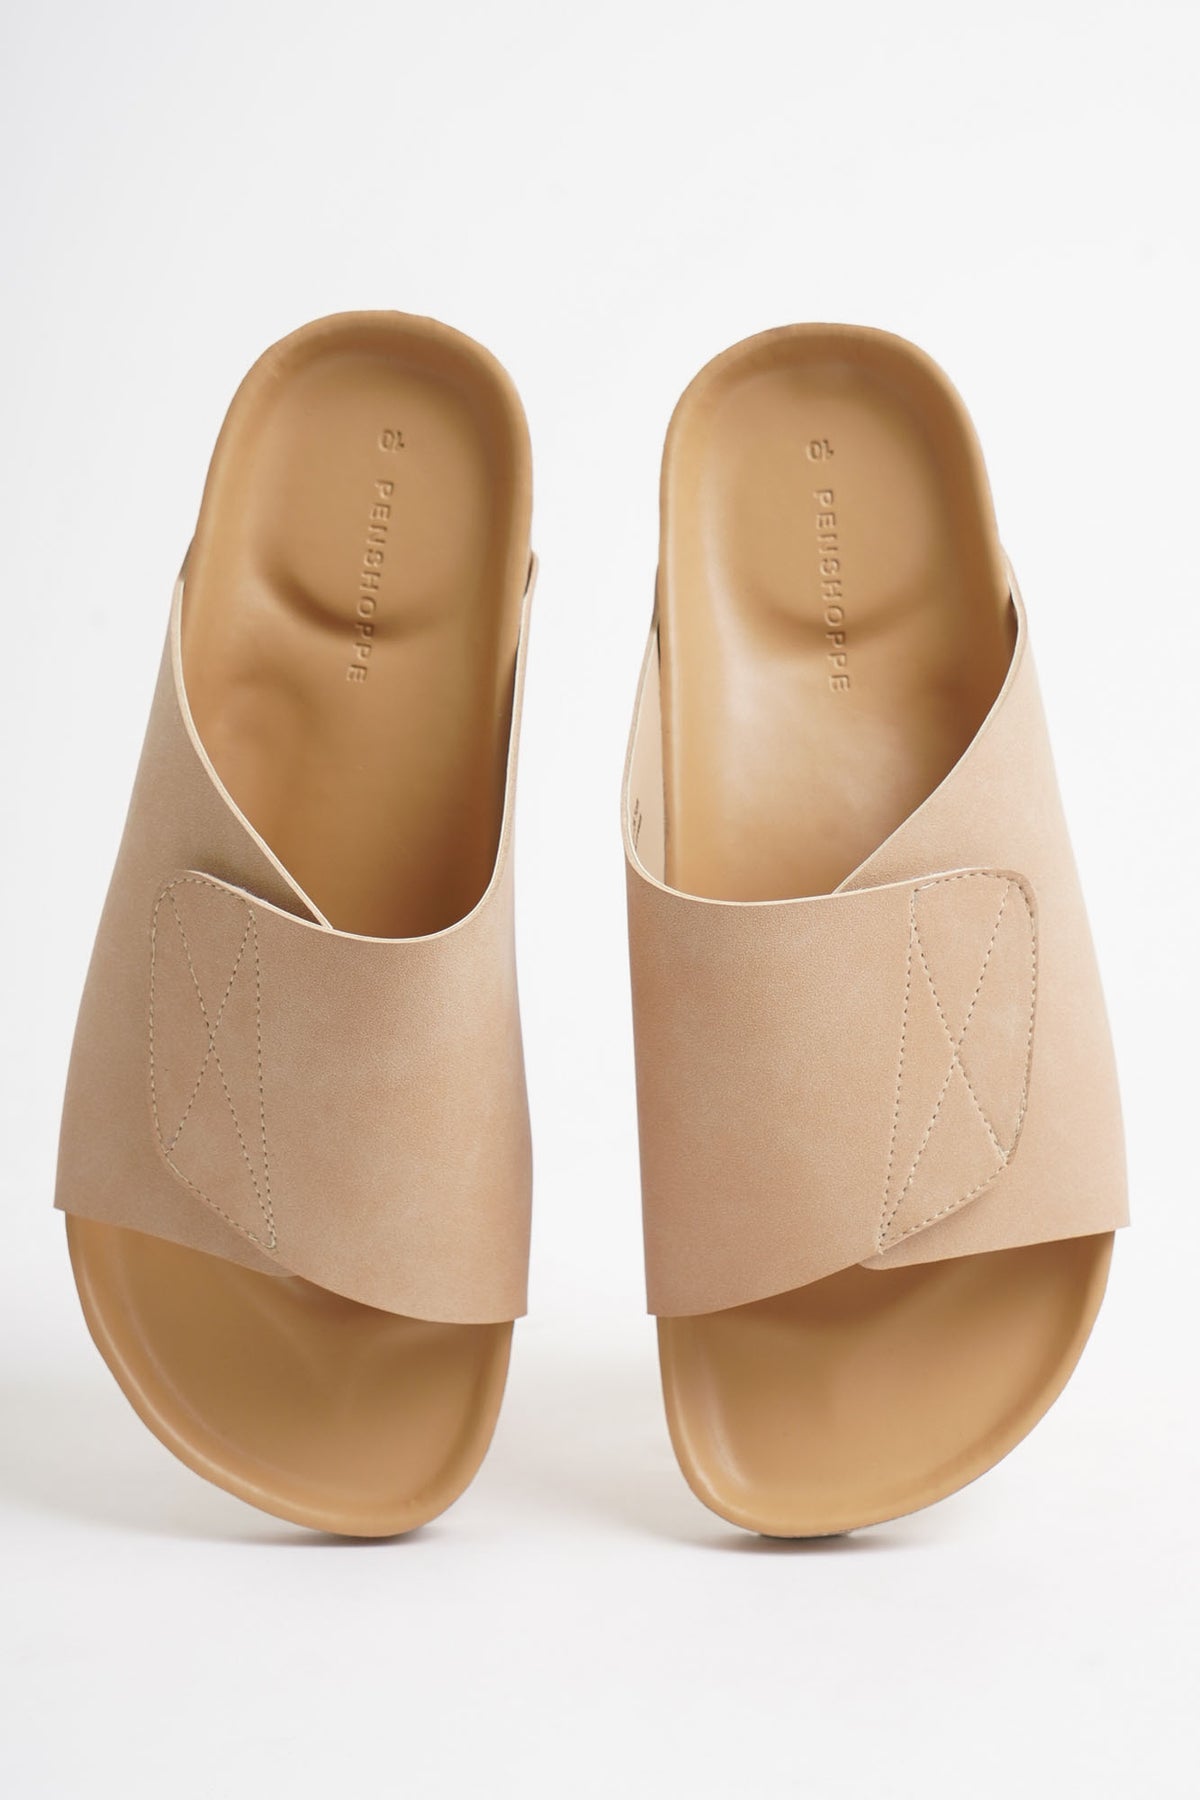 Slippers Flip Flops Summer Beach Cork Shoes Slides Girls Flats Sandals –  Triple AAA Fashion Collection